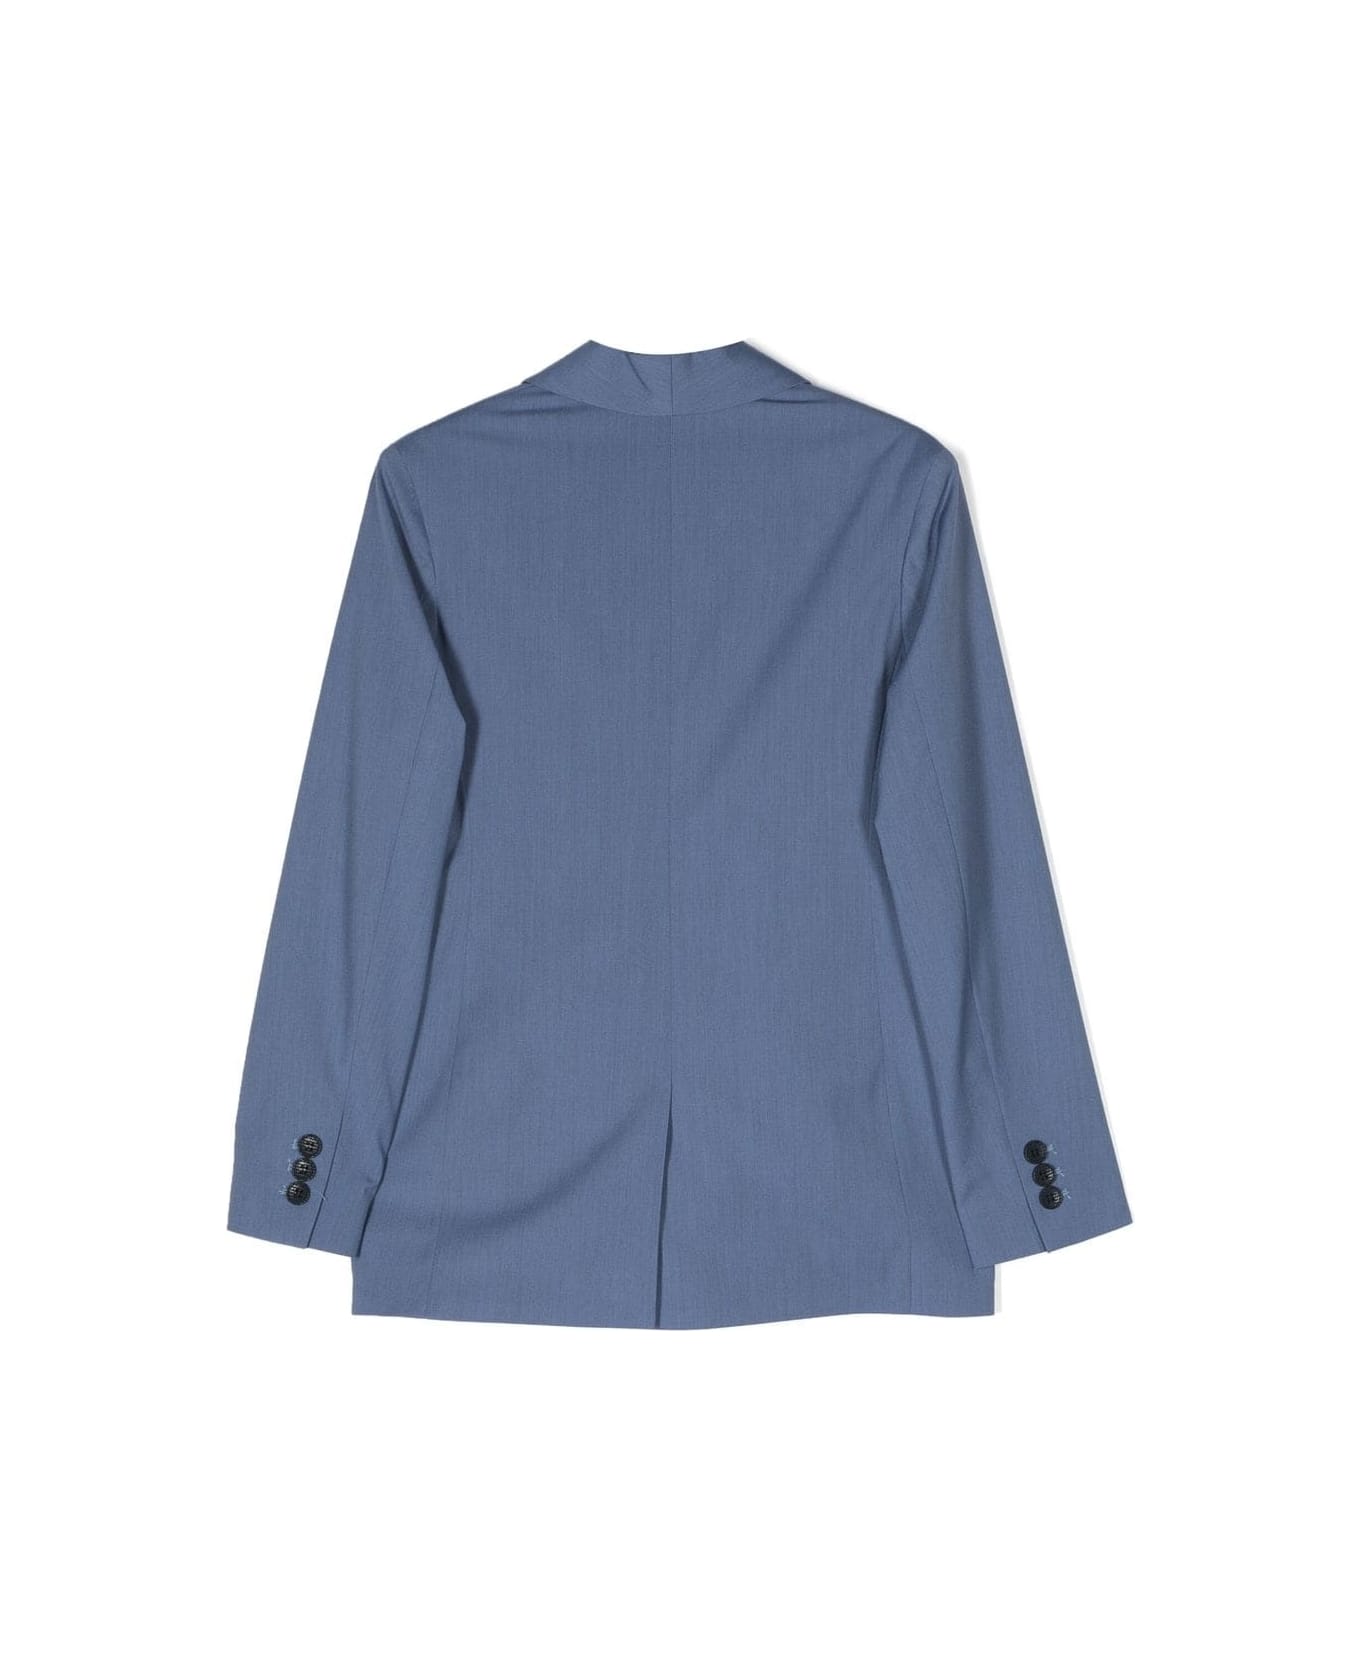 Daniele Alessandrini Jacket With Decorative Buttons - Light blue